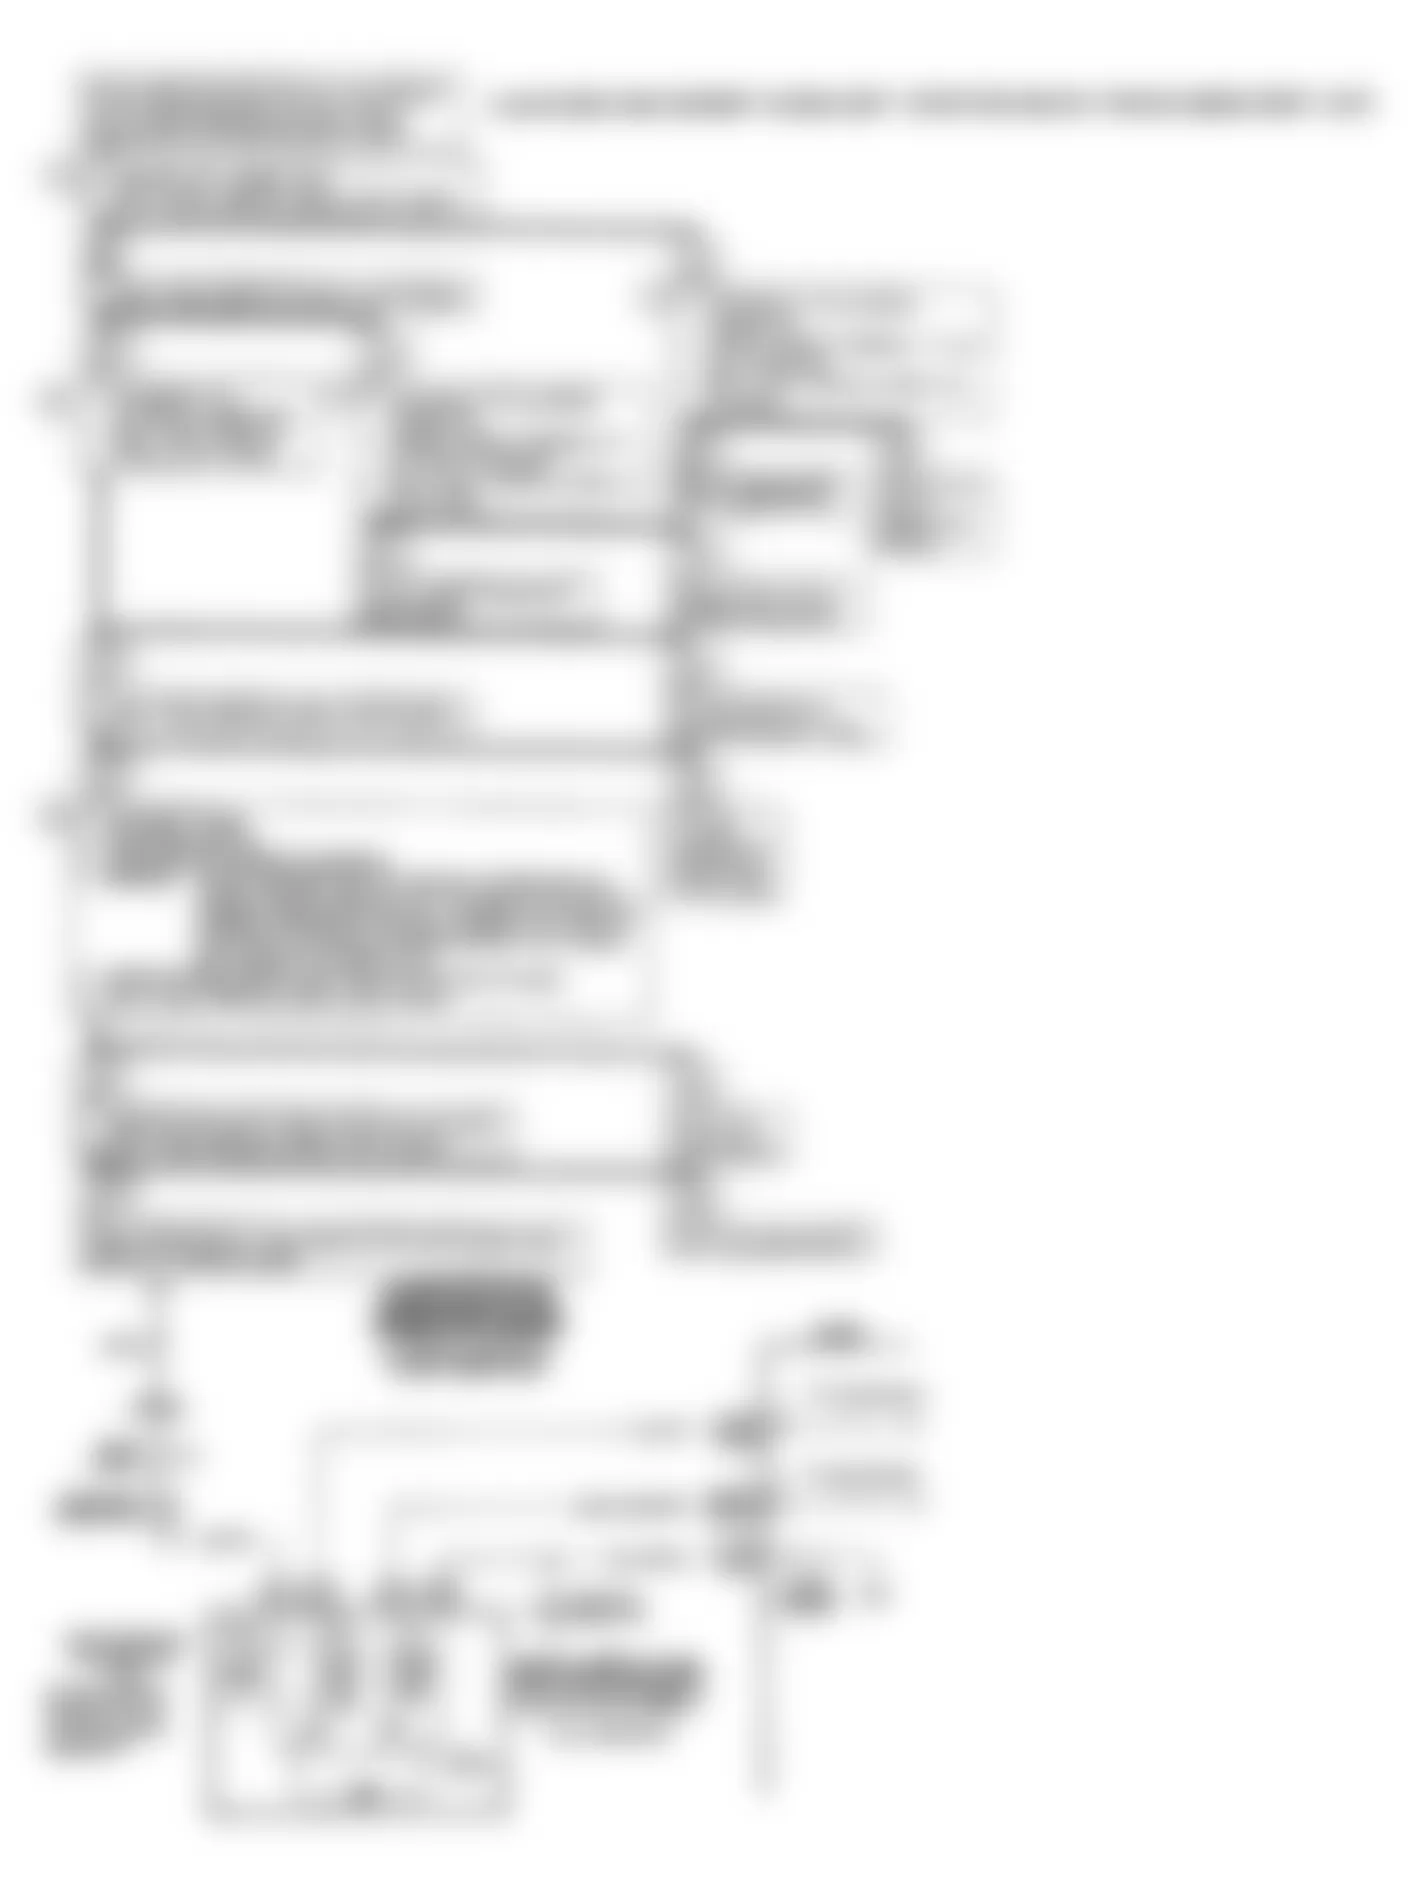 Buick Regal Gran Sport 1990 - Component Locations -  Code 62: Gear Switch Error Schematic & Flow Chart (J Body)